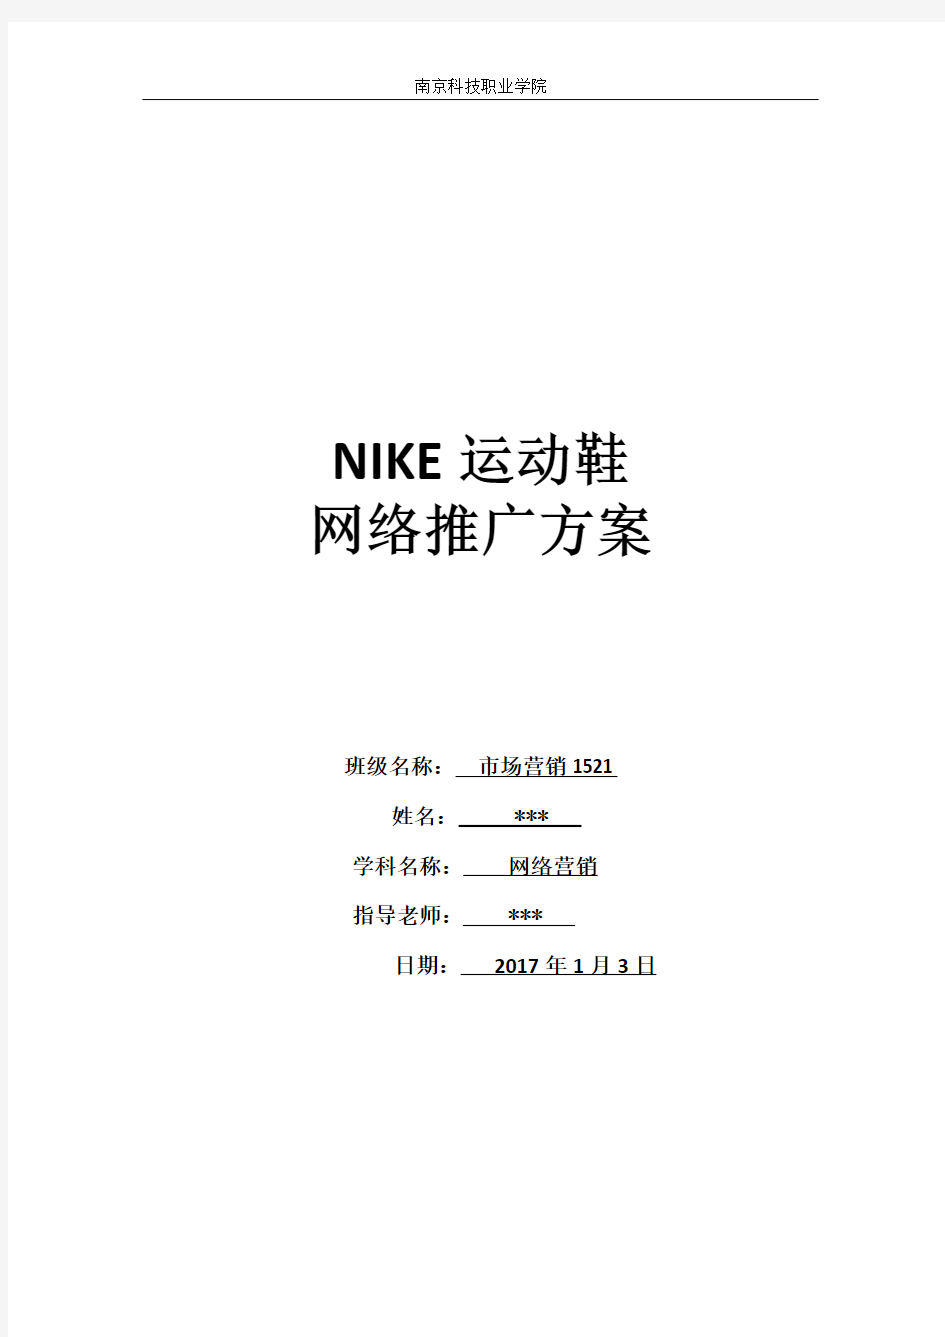 NIKE运动鞋网络推广方案